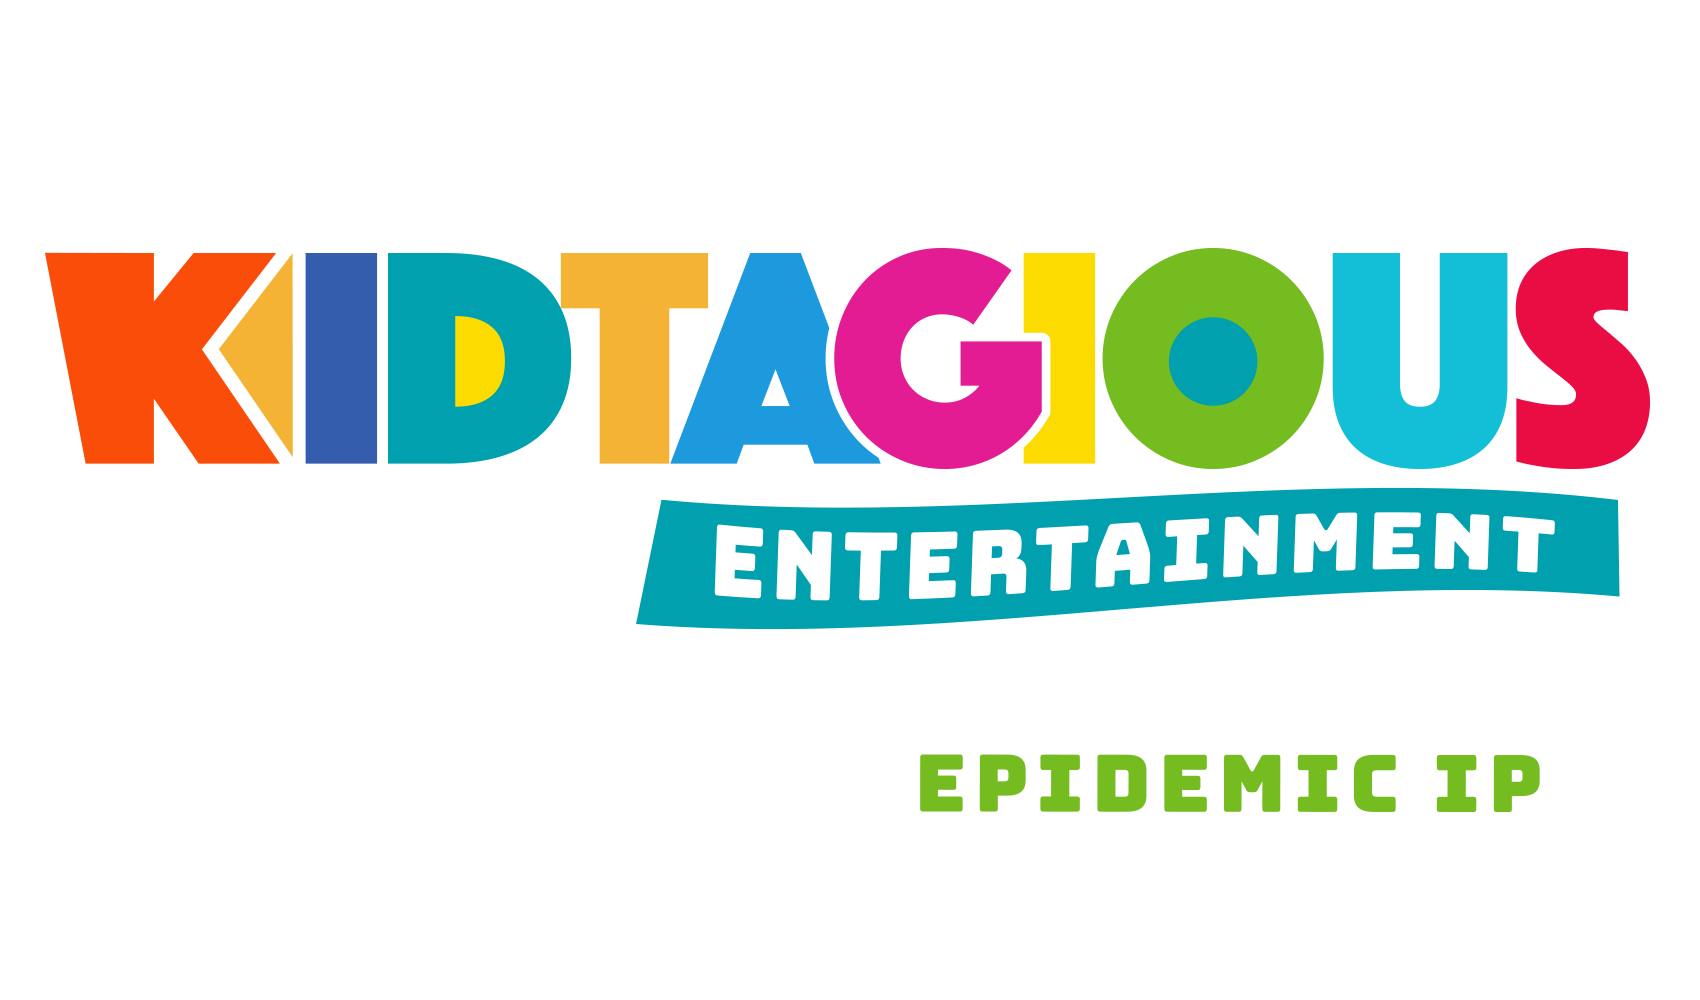 Kidtagious Entertainment